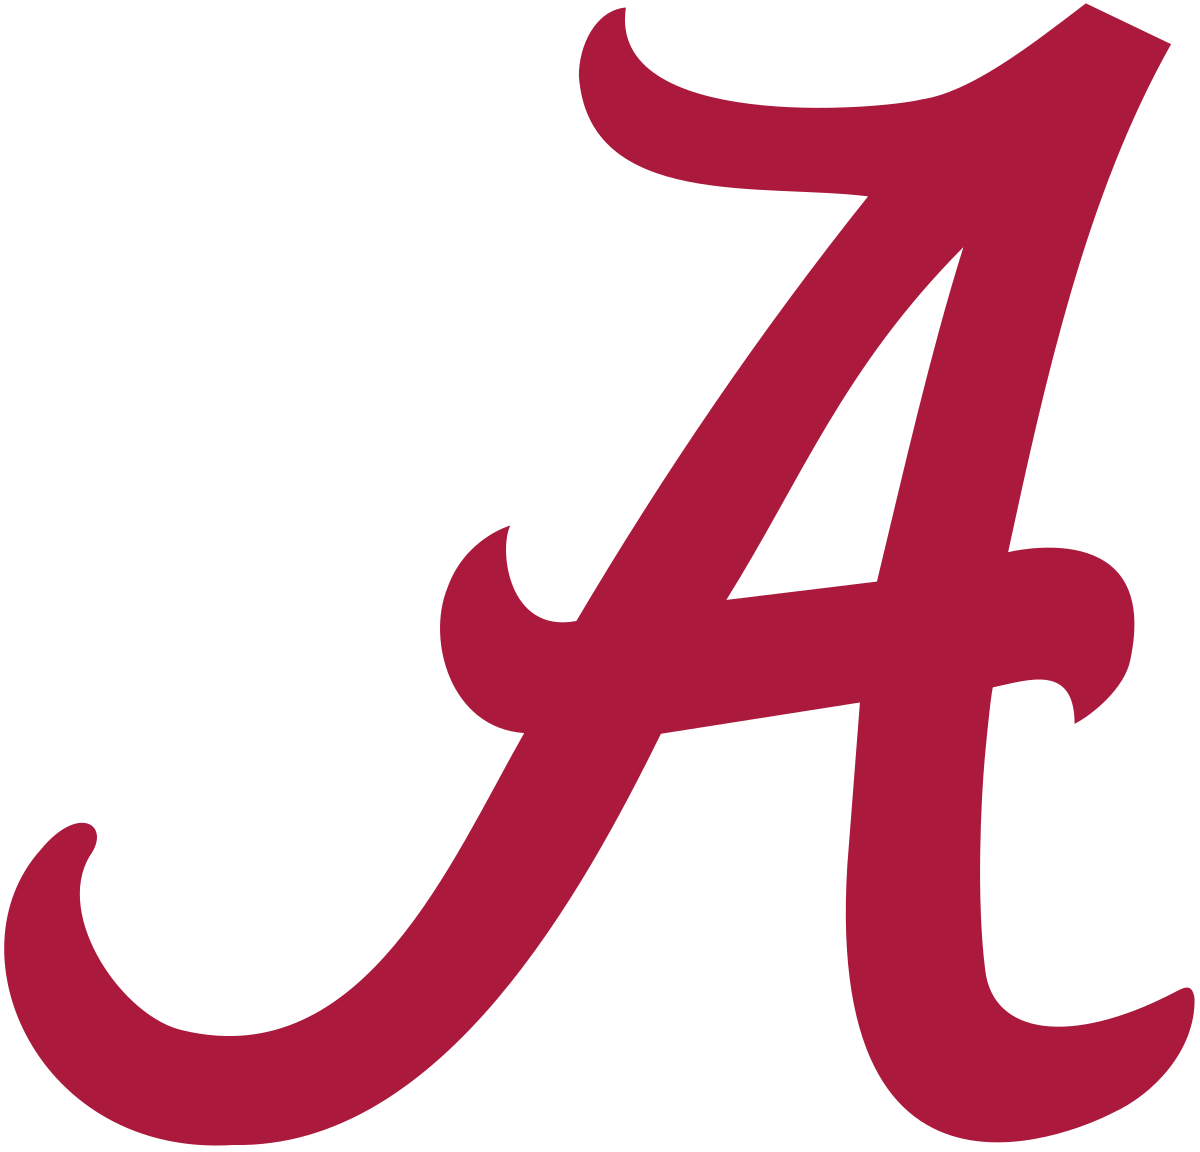 University of Alabama Football Logo - Alabama Crimson Tide